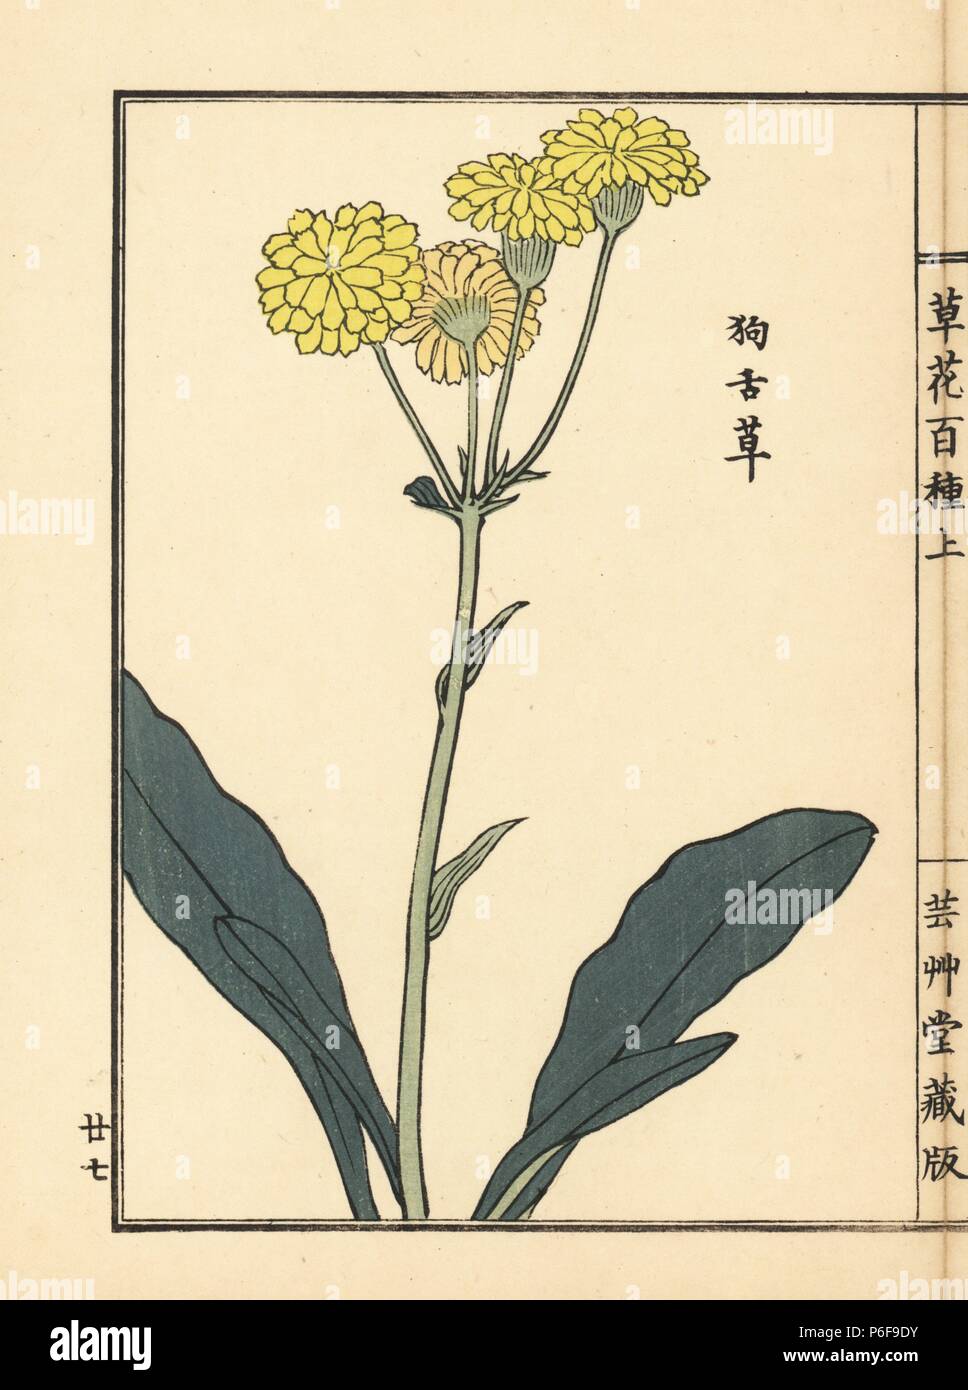 Ogaoguruma or ragwort, Senecio integrifolius var. spathulatus. Handcoloured woodblock print by Kono Bairei from Kusa Bana Hyakushu (One Hundred Varieties of Flowers), Tokyo, Yamada, 1901. Stock Photo